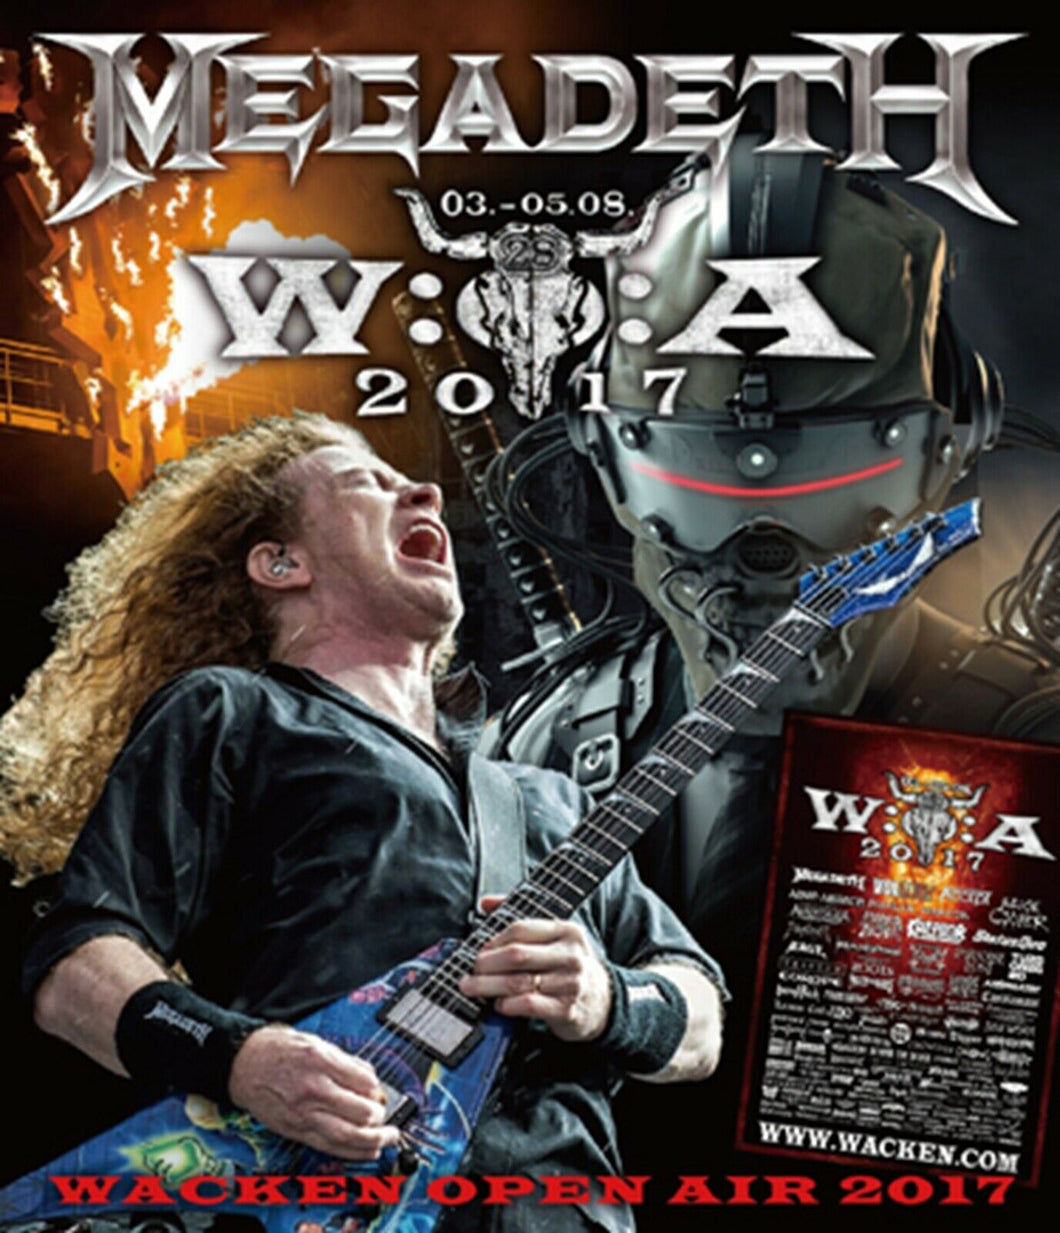 Megadeth Wacken Open Air 2017 Blu-ray 1 Disc 24 Tracks Heavy Metal Music F/S